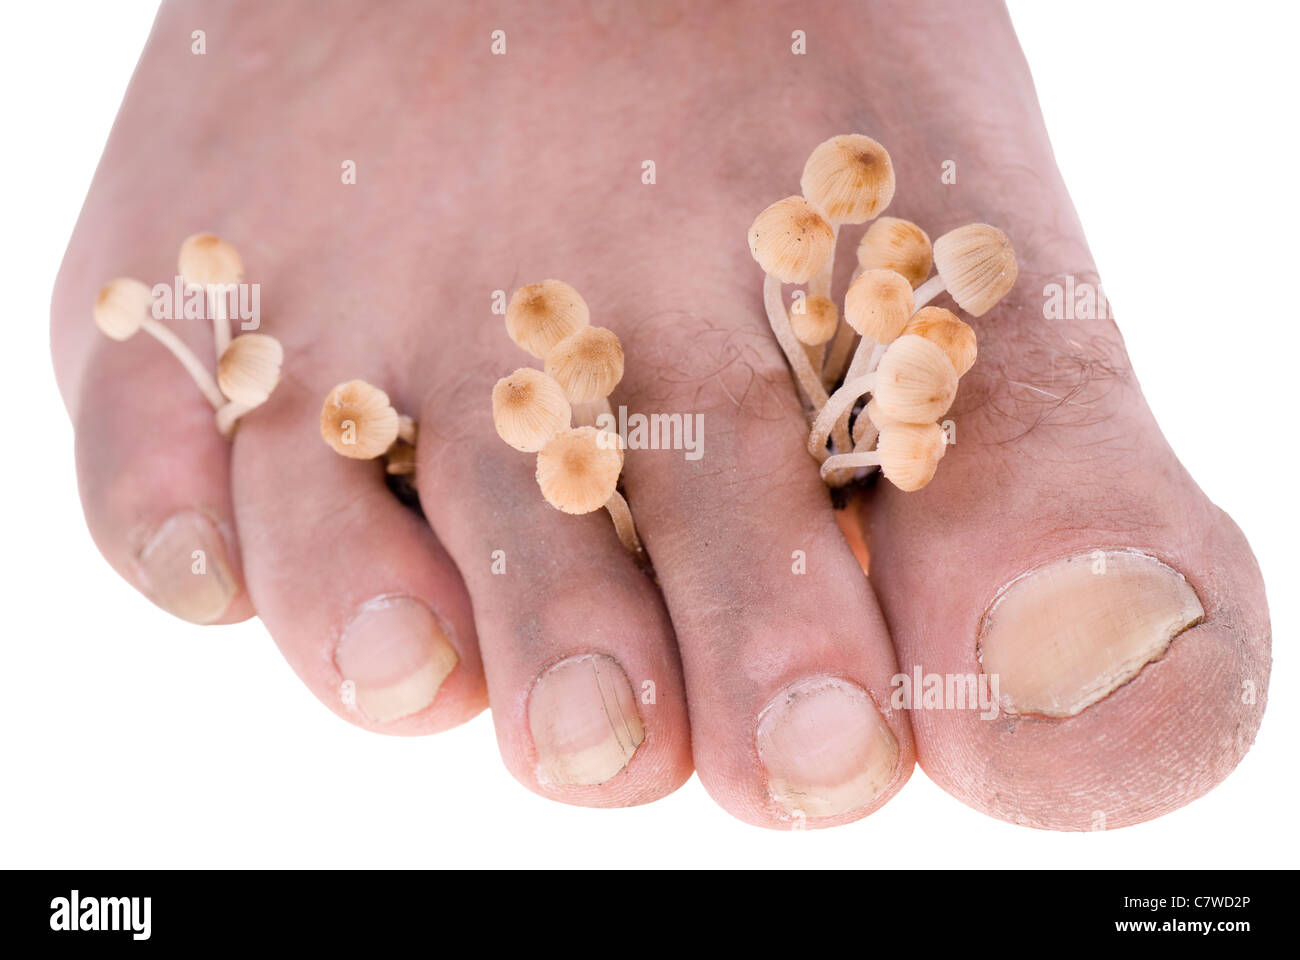 Sucio pie infectado micosis sobre fondo blanco. Foto de stock